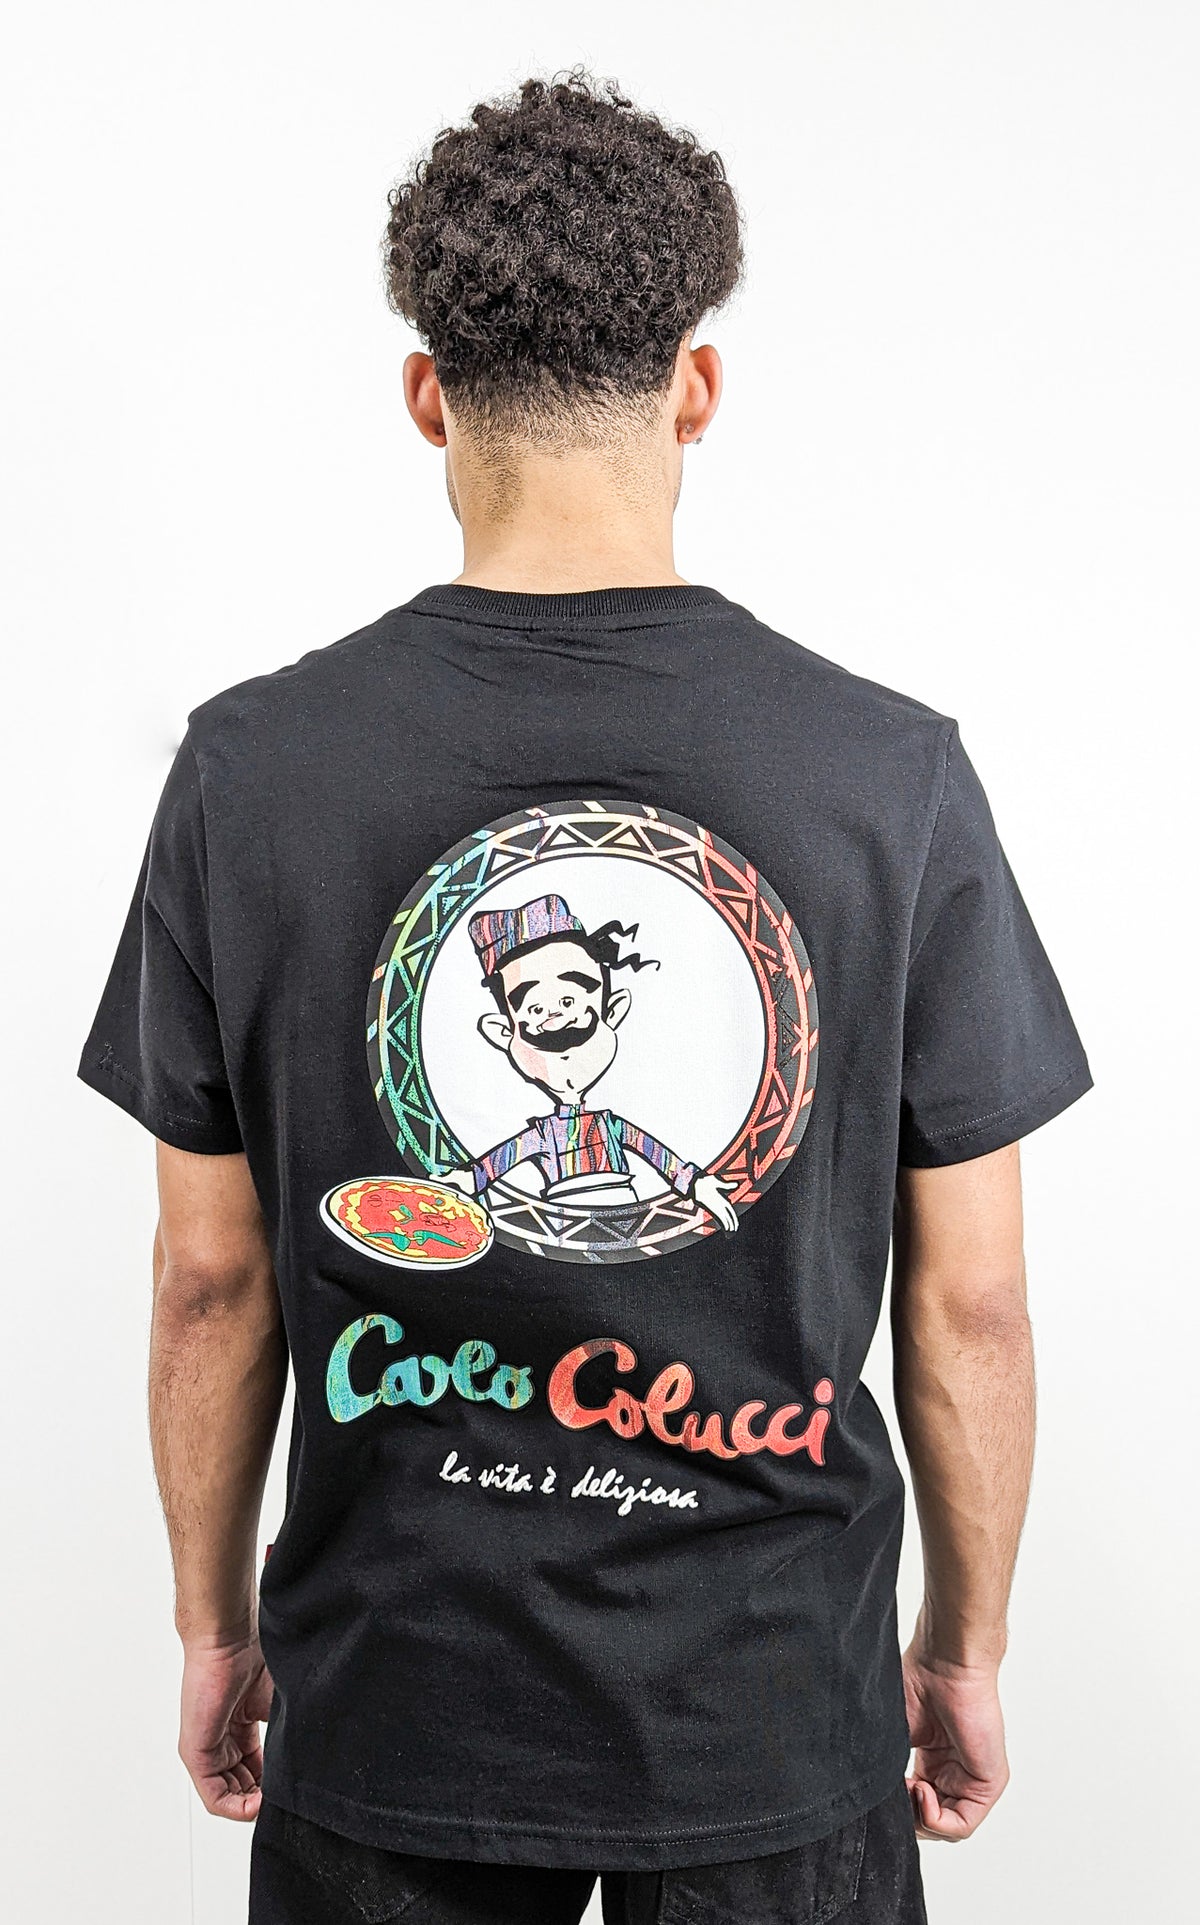 Carlo Colucci Milano Print T-Shirt Black - Soulsideshop